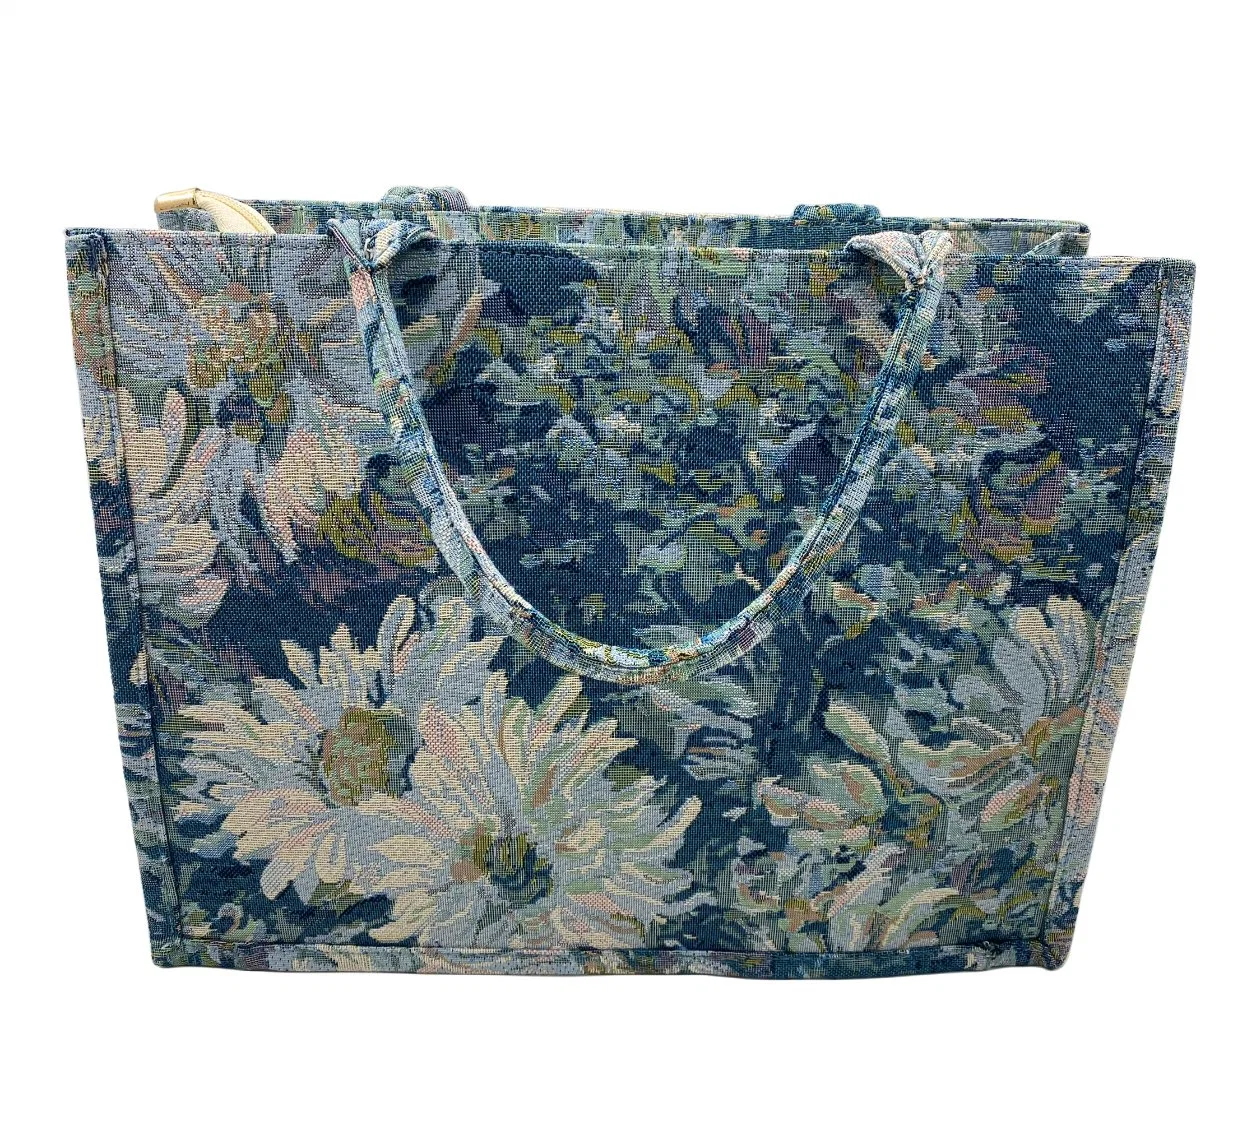 Jacqard Canvas Designer Branded Women's Ladies Handbag Shopping Bags Fd917-1